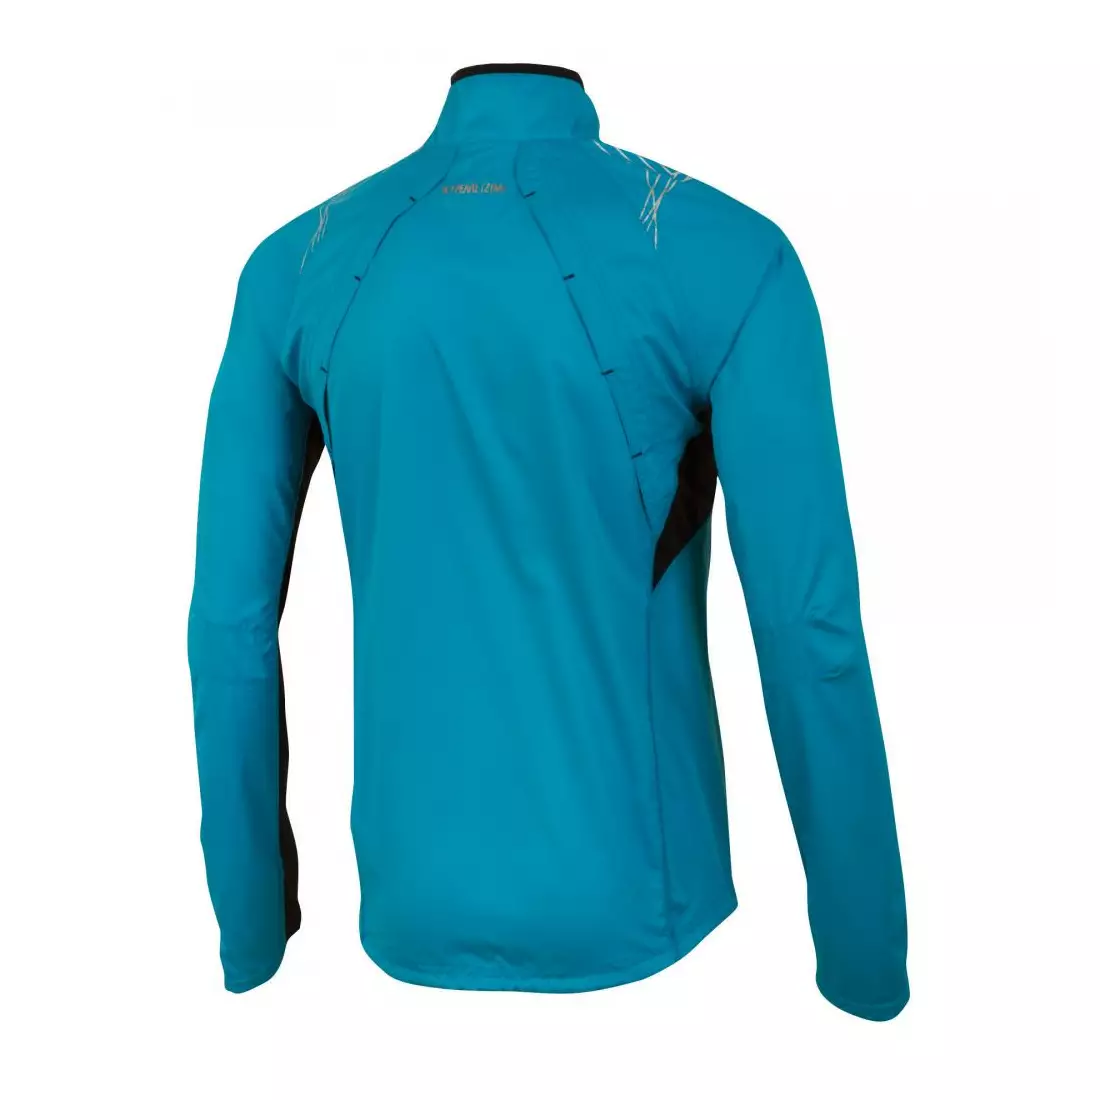 PEARL IZUMI - ELITE Infinity Jacket 12131101-3PK - pánska bežecká bunda, farba: Modrá